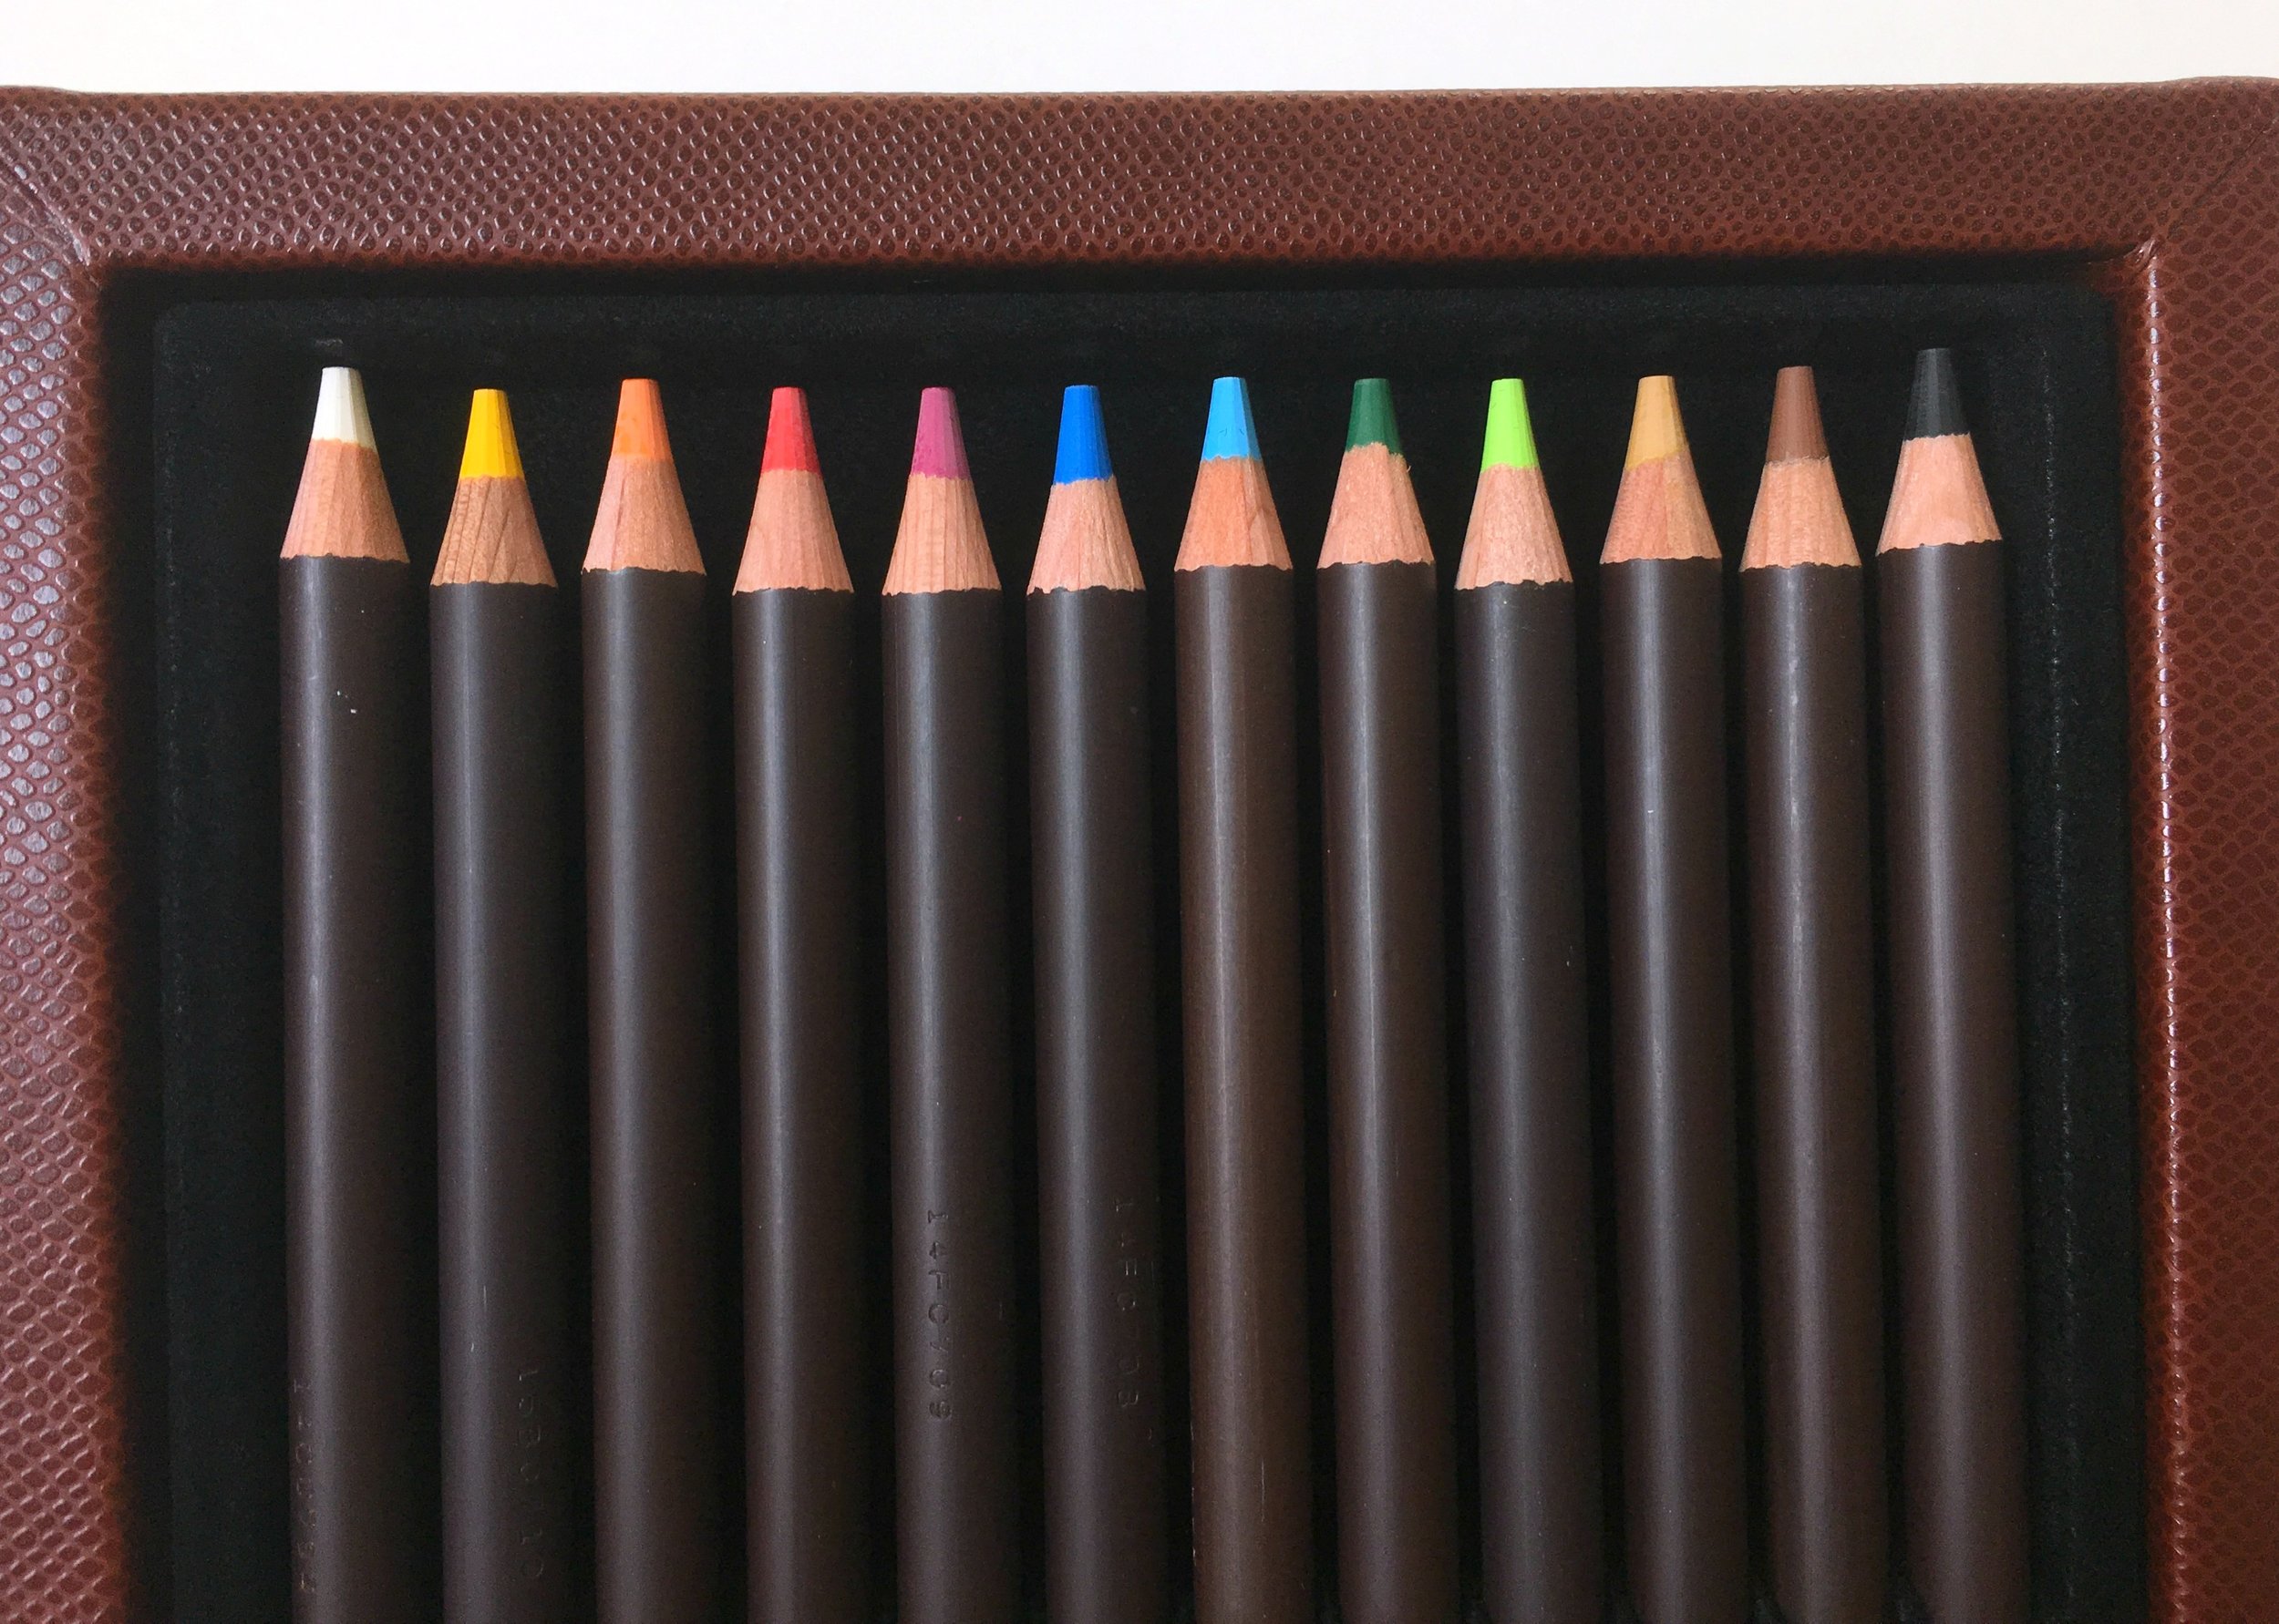 Crayola Erasable Colored Pencils Pack Of 12 Pencils - Office Depot